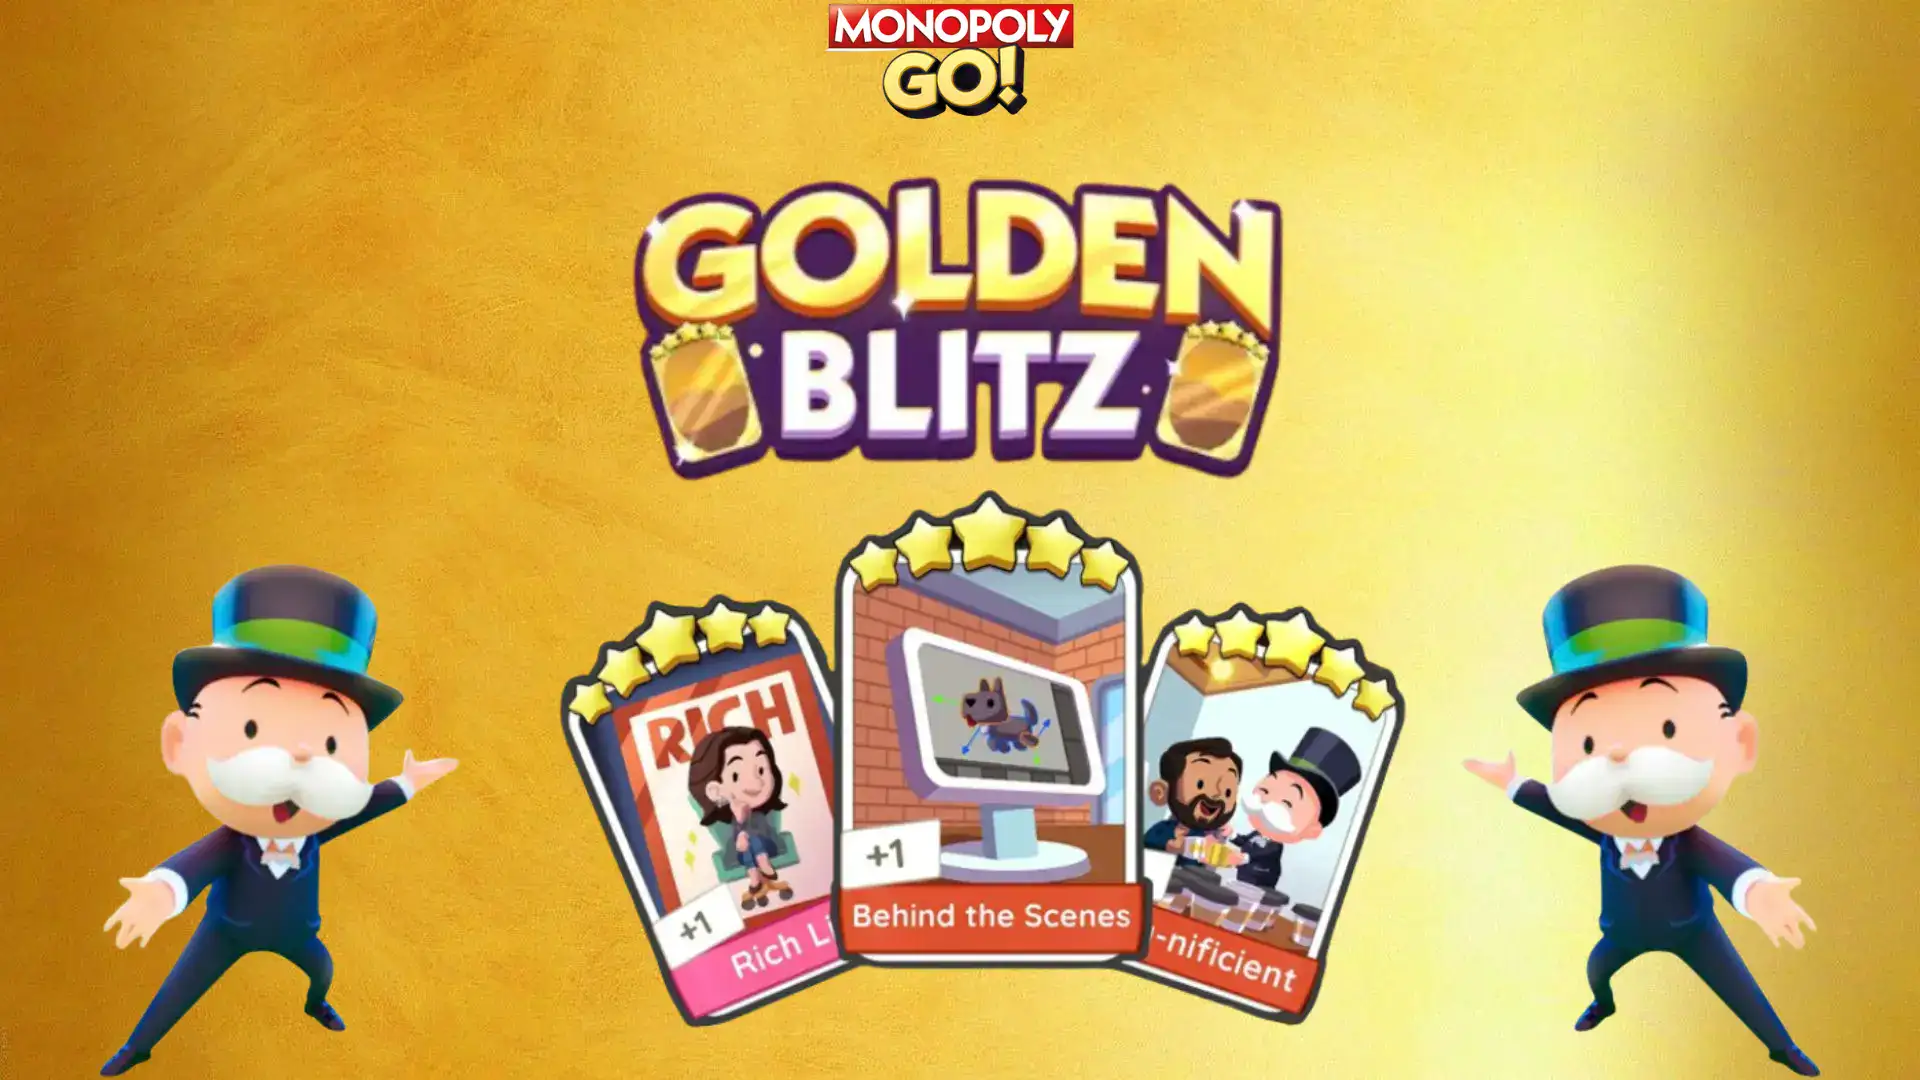 monopoly go golden blitz event